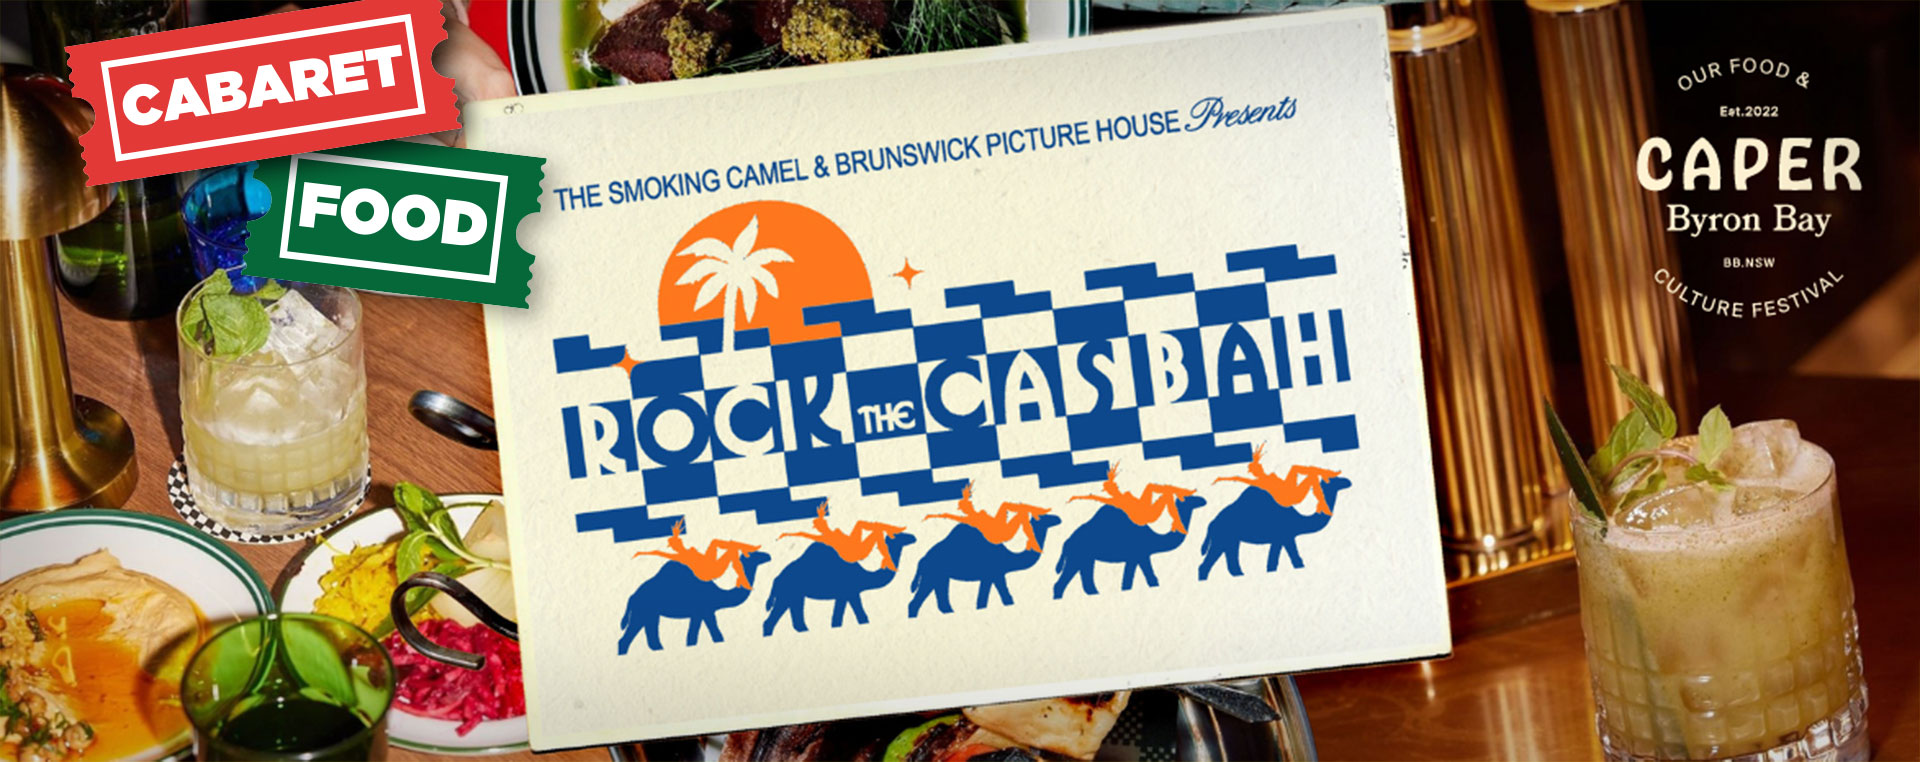 Rock the Casbah Dinner & Show